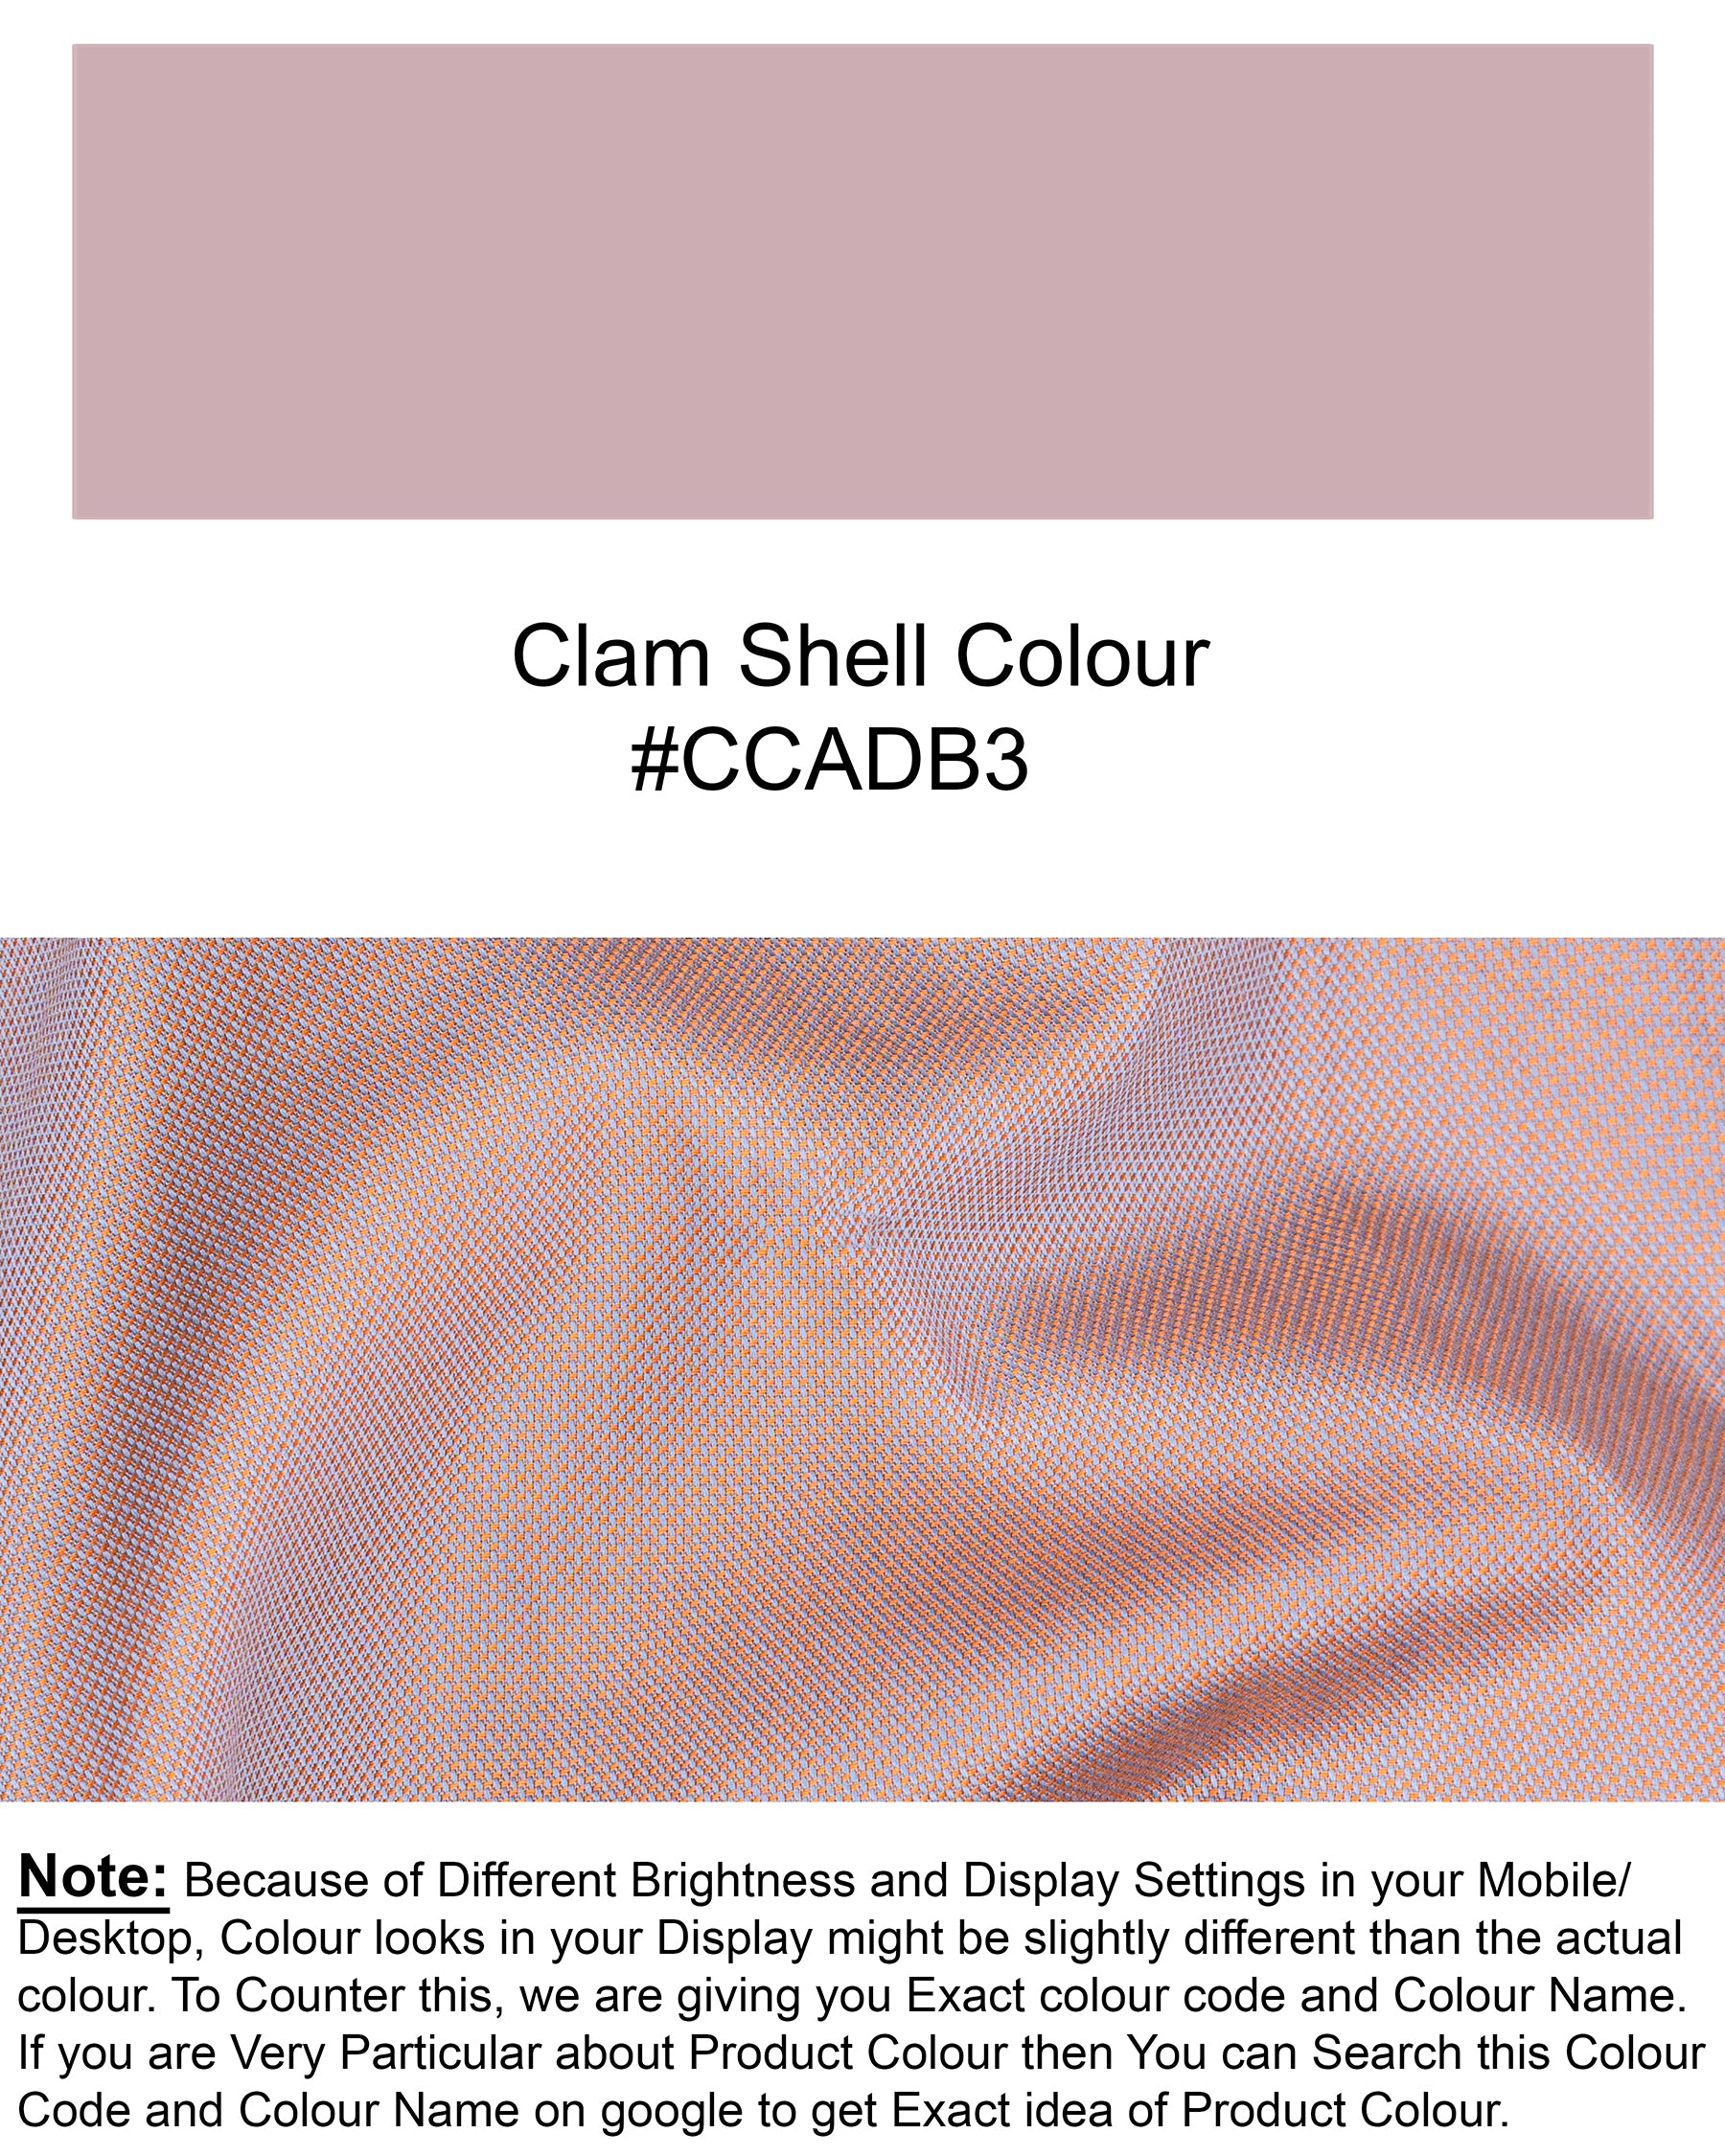 Clam Shell Dobby Diagonal Textured Premium Giza Cotton Shirt 6565-CA-38,6565-CA-H-38,6565-CA-39,6565-CA-H-39,6565-CA-40,6565-CA-H-40,6565-CA-42,6565-CA-H-42,6565-CA-44,6565-CA-H-44,6565-CA-46,6565-CA-H-46,6565-CA-48,6565-CA-H-48,6565-CA-50,6565-CA-H-50,6565-CA-52,6565-CA-H-52